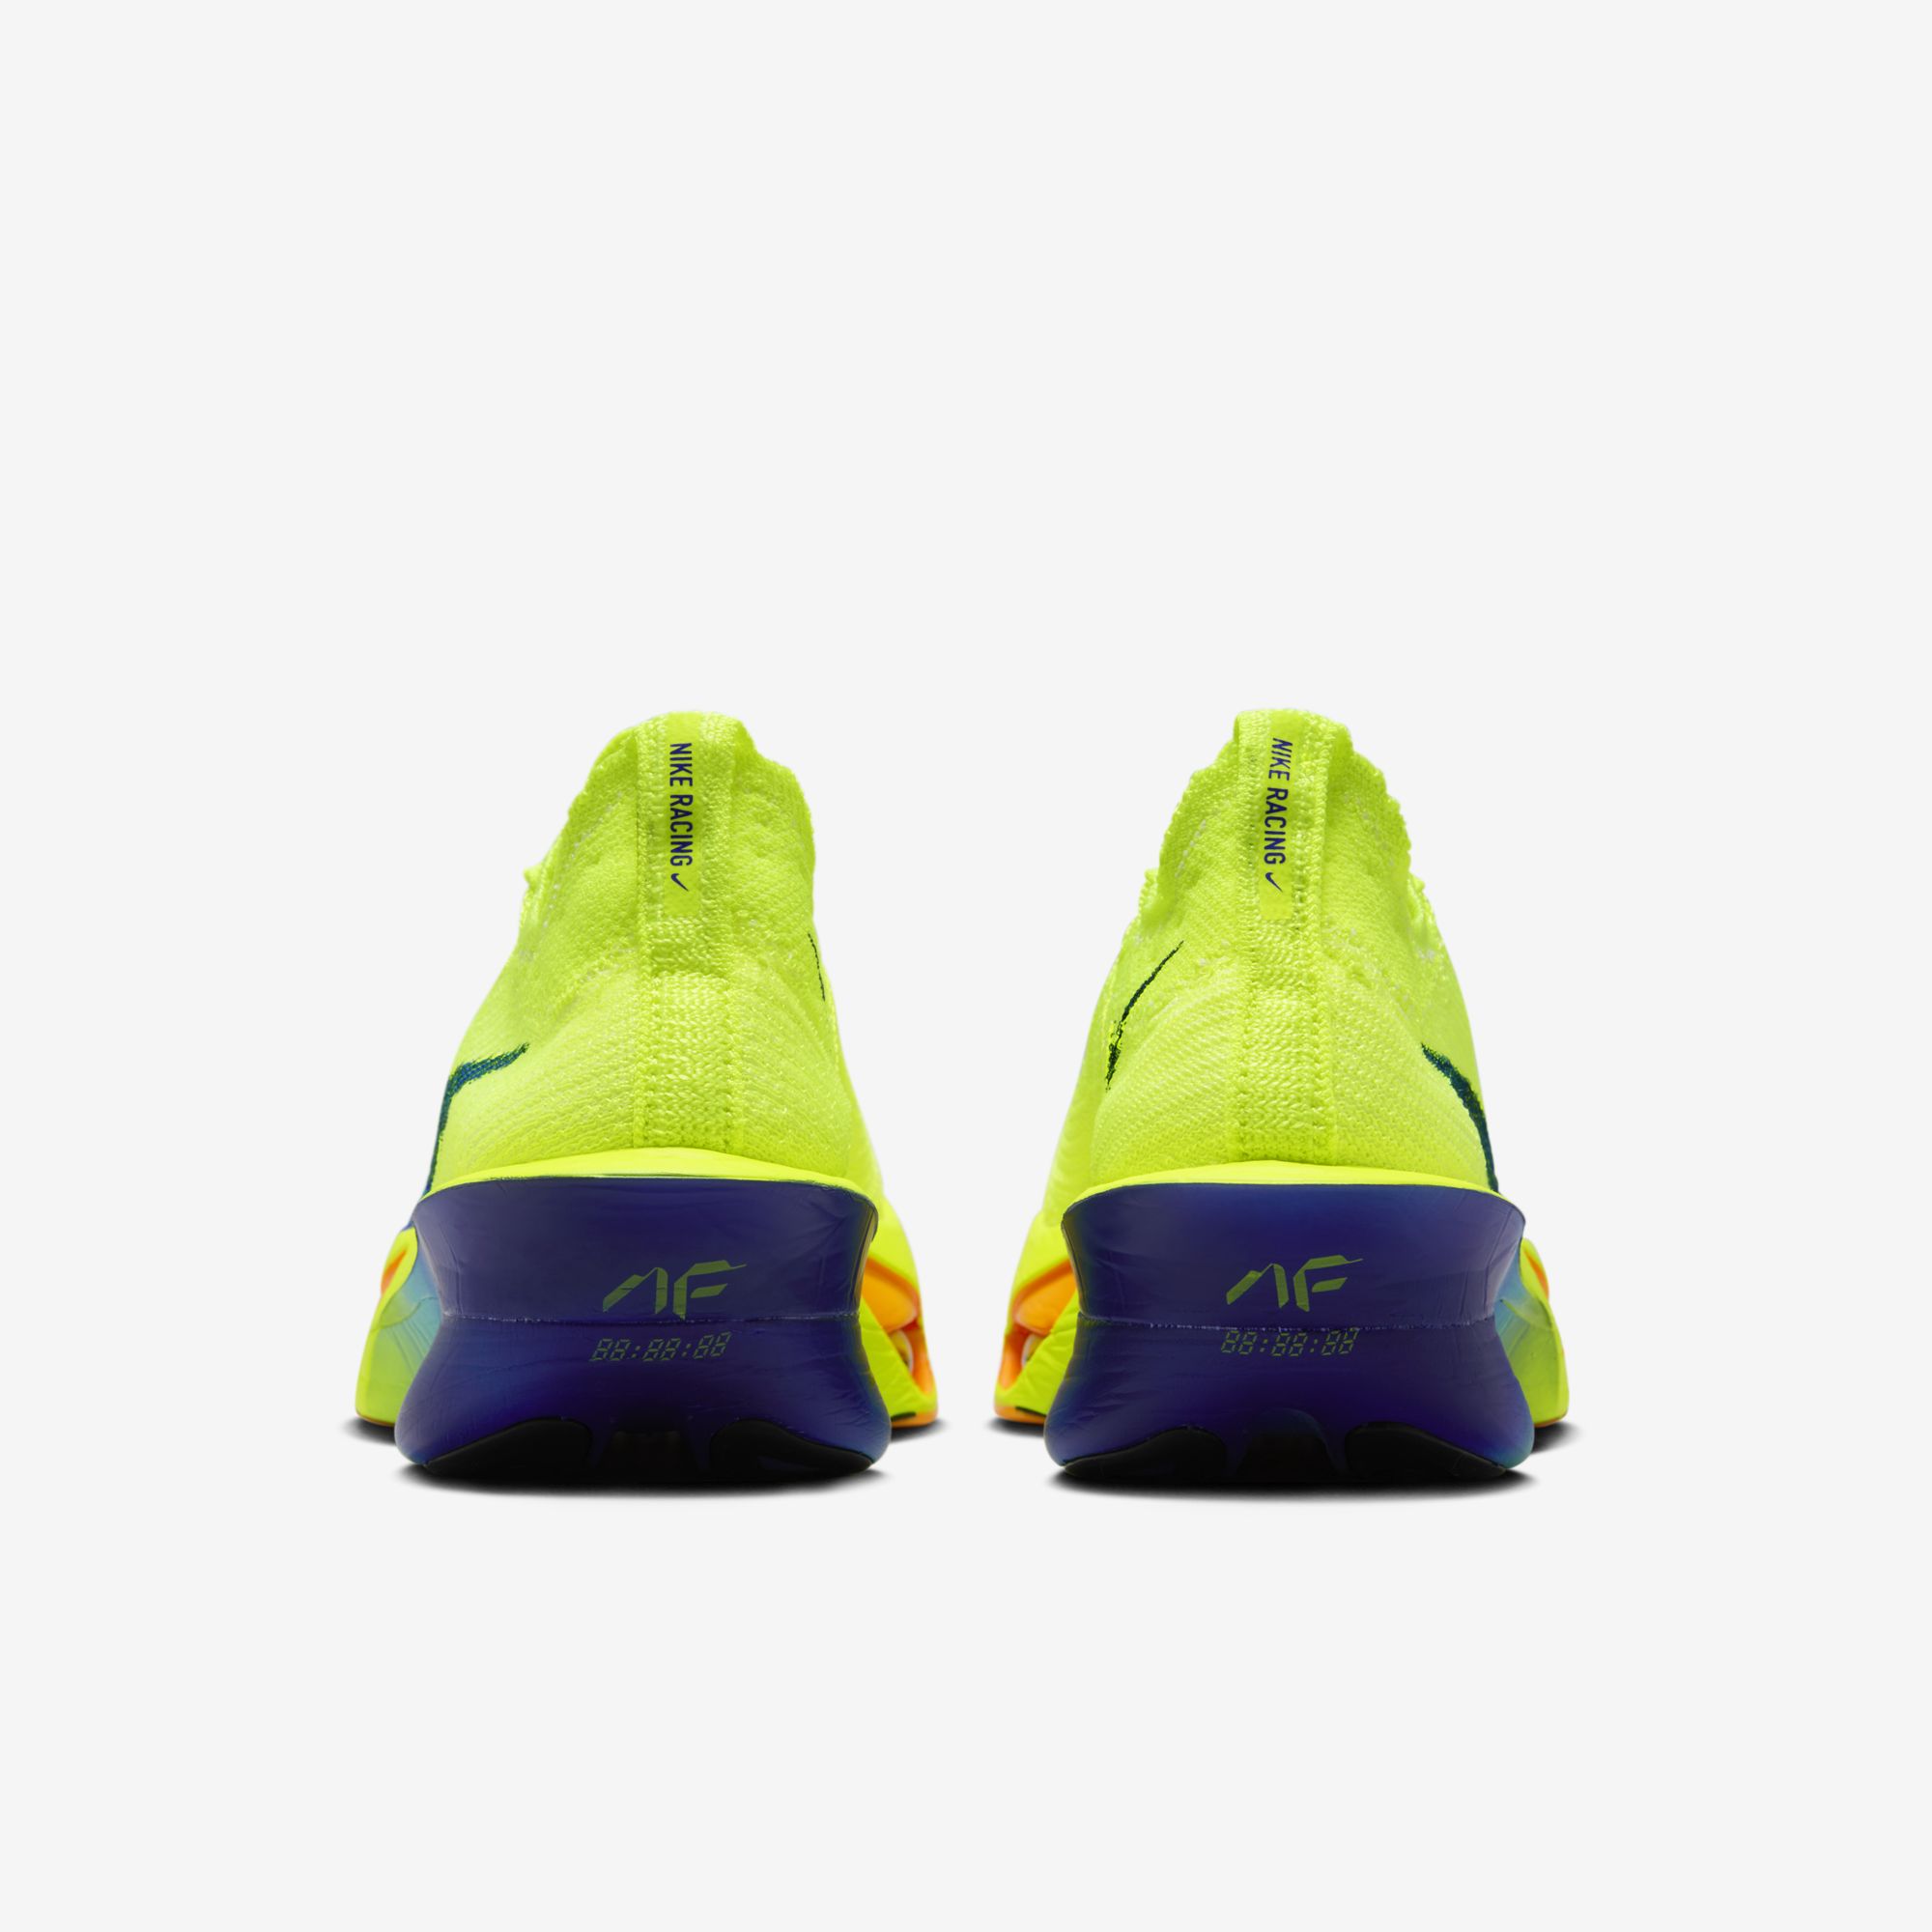 Nike Alphafly 3, Voltio/Cactus polvoriento/Naranja total/Concordia, hi-res